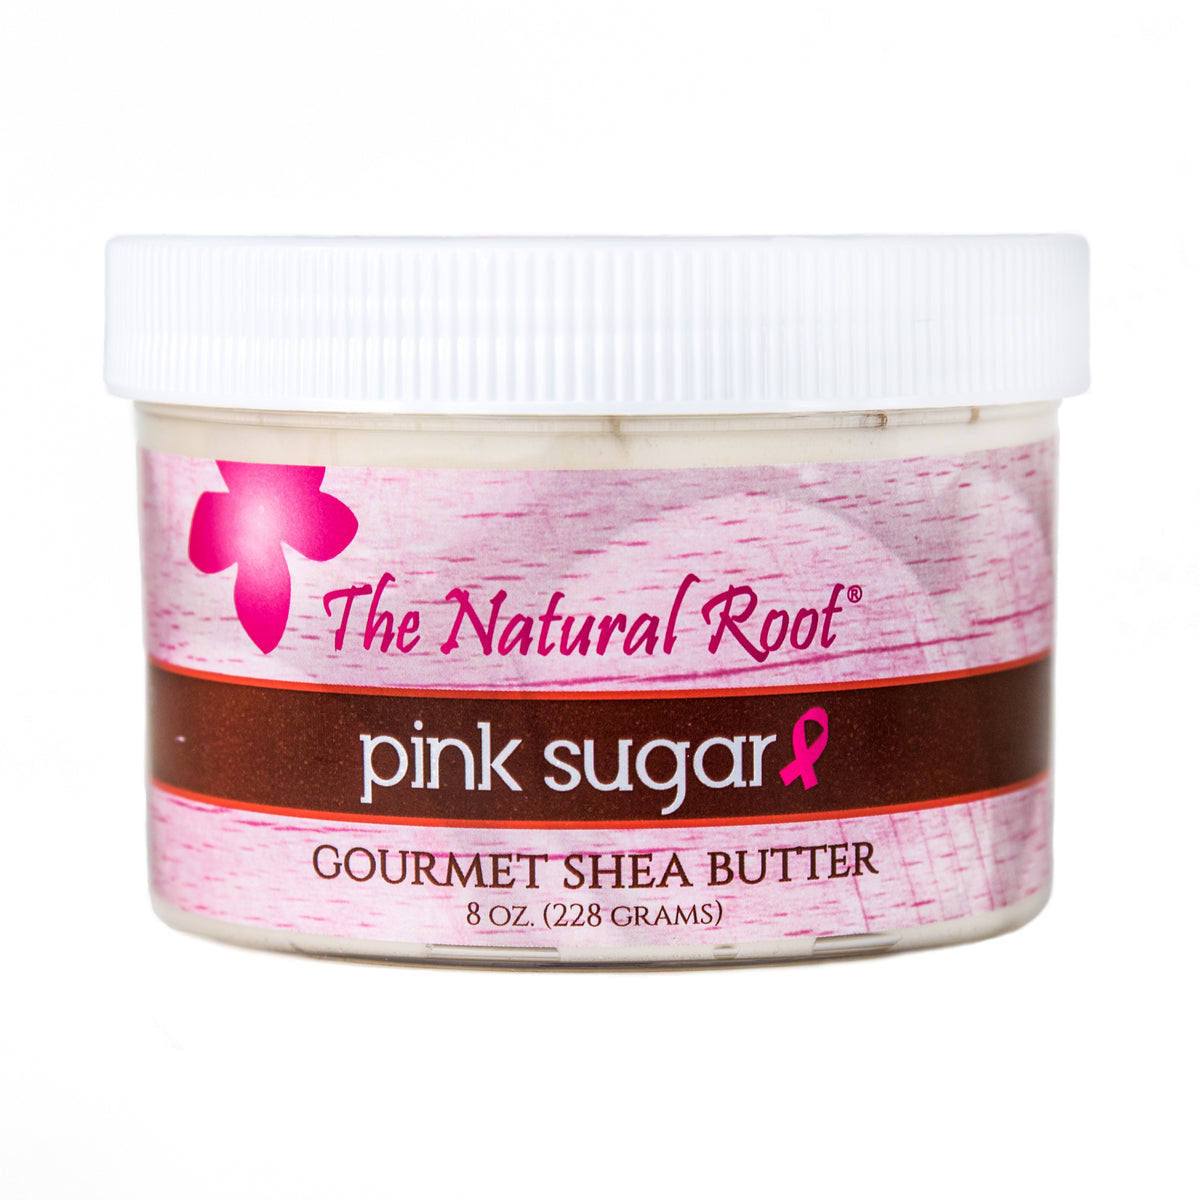 Pink Sugar Body Butter, Natural, Fresh, Uplifting